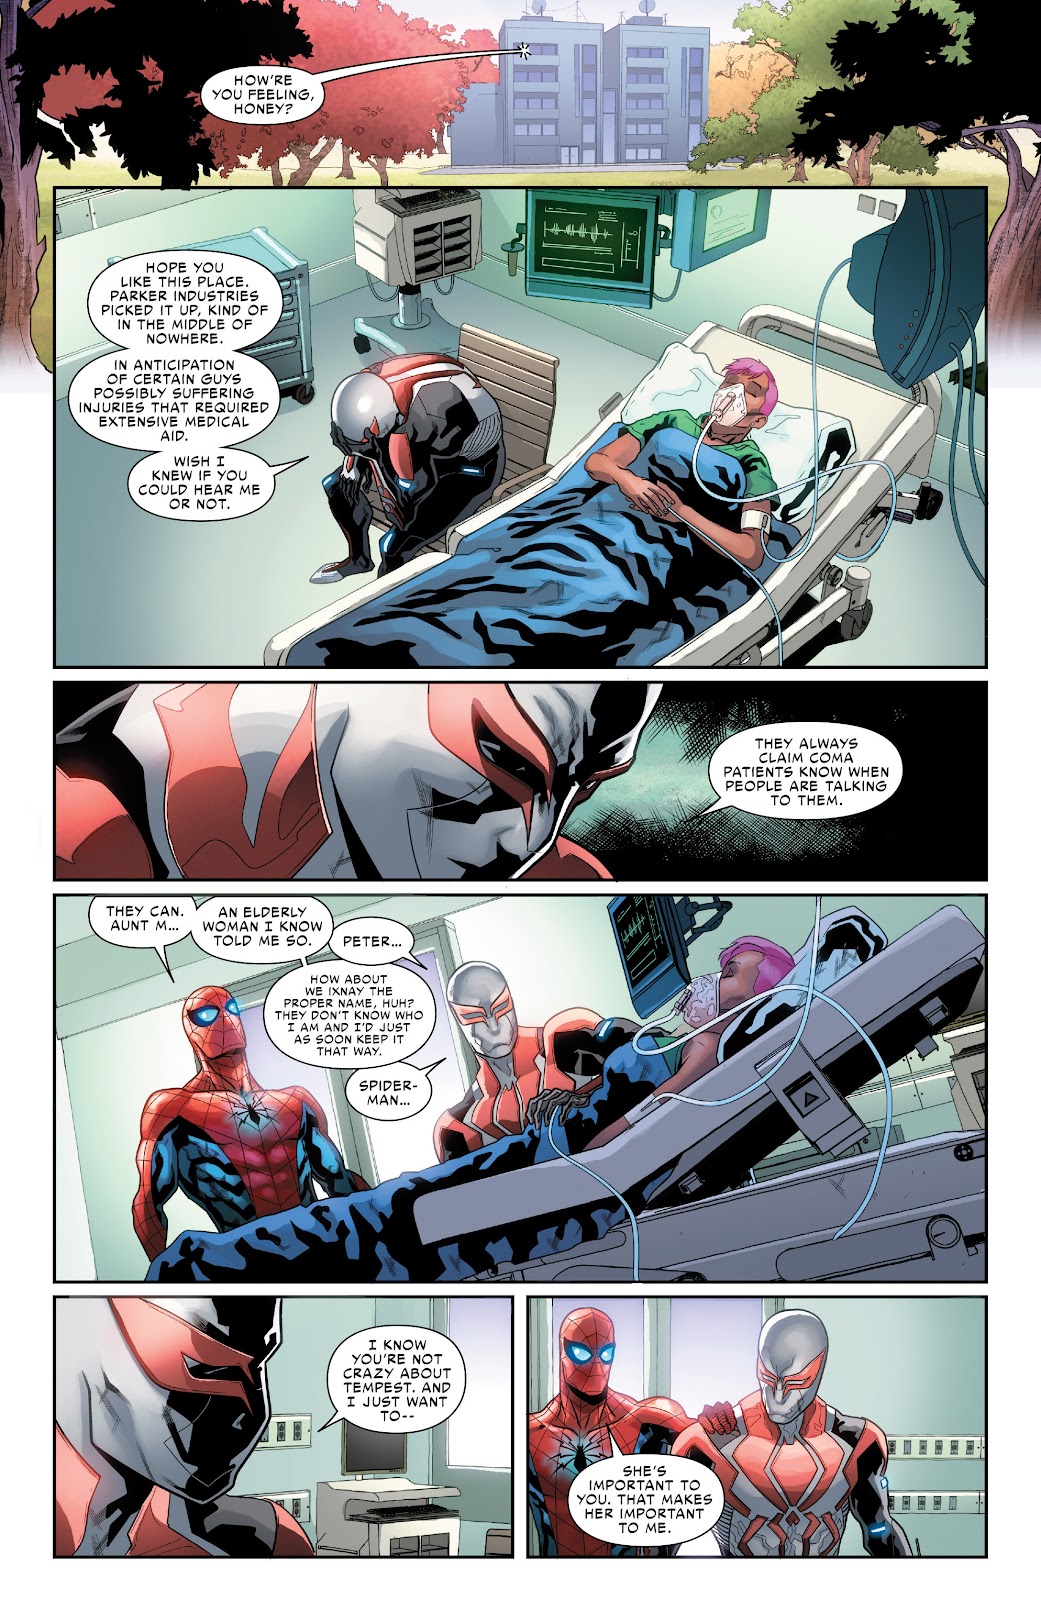 Spider-Man 2099 (2015) issue 9 - Page 3